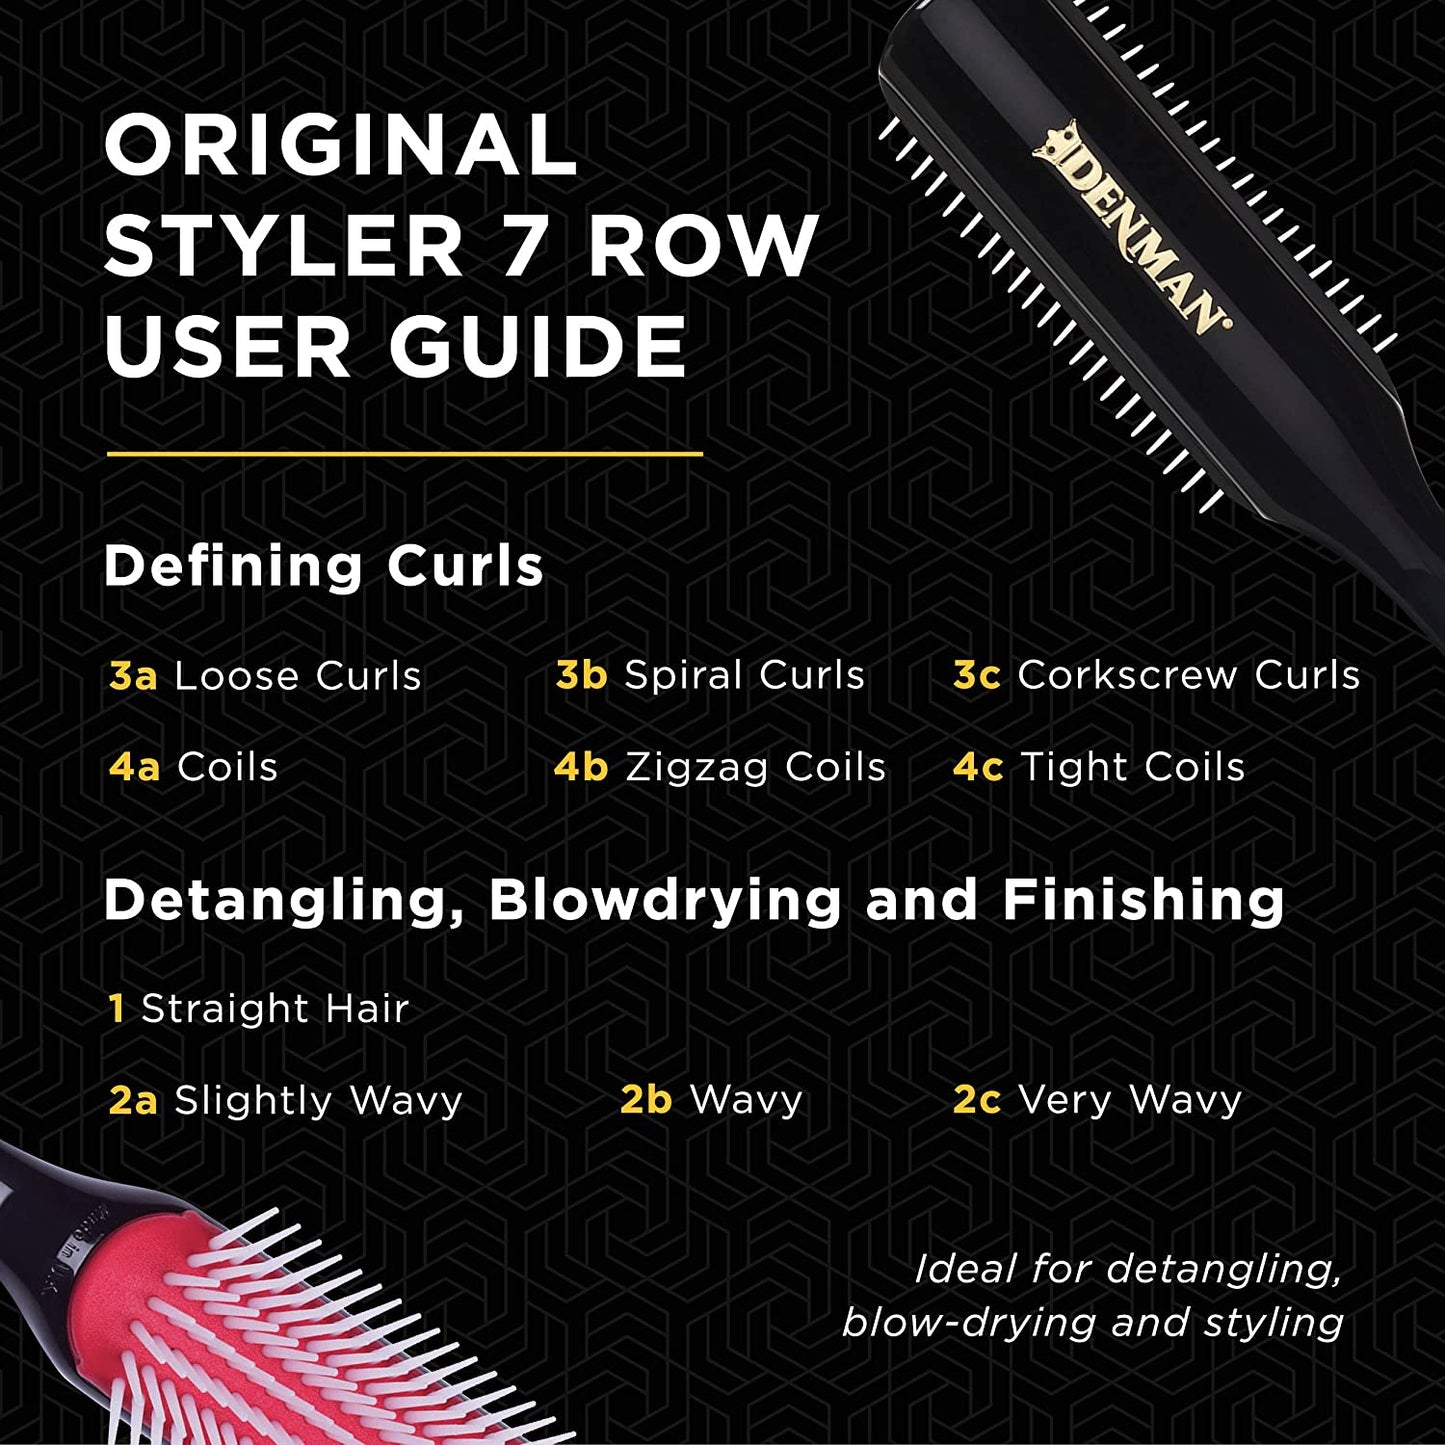 Denman Hair Brush for Curly Hair D3 (Black) 7 Row Classic